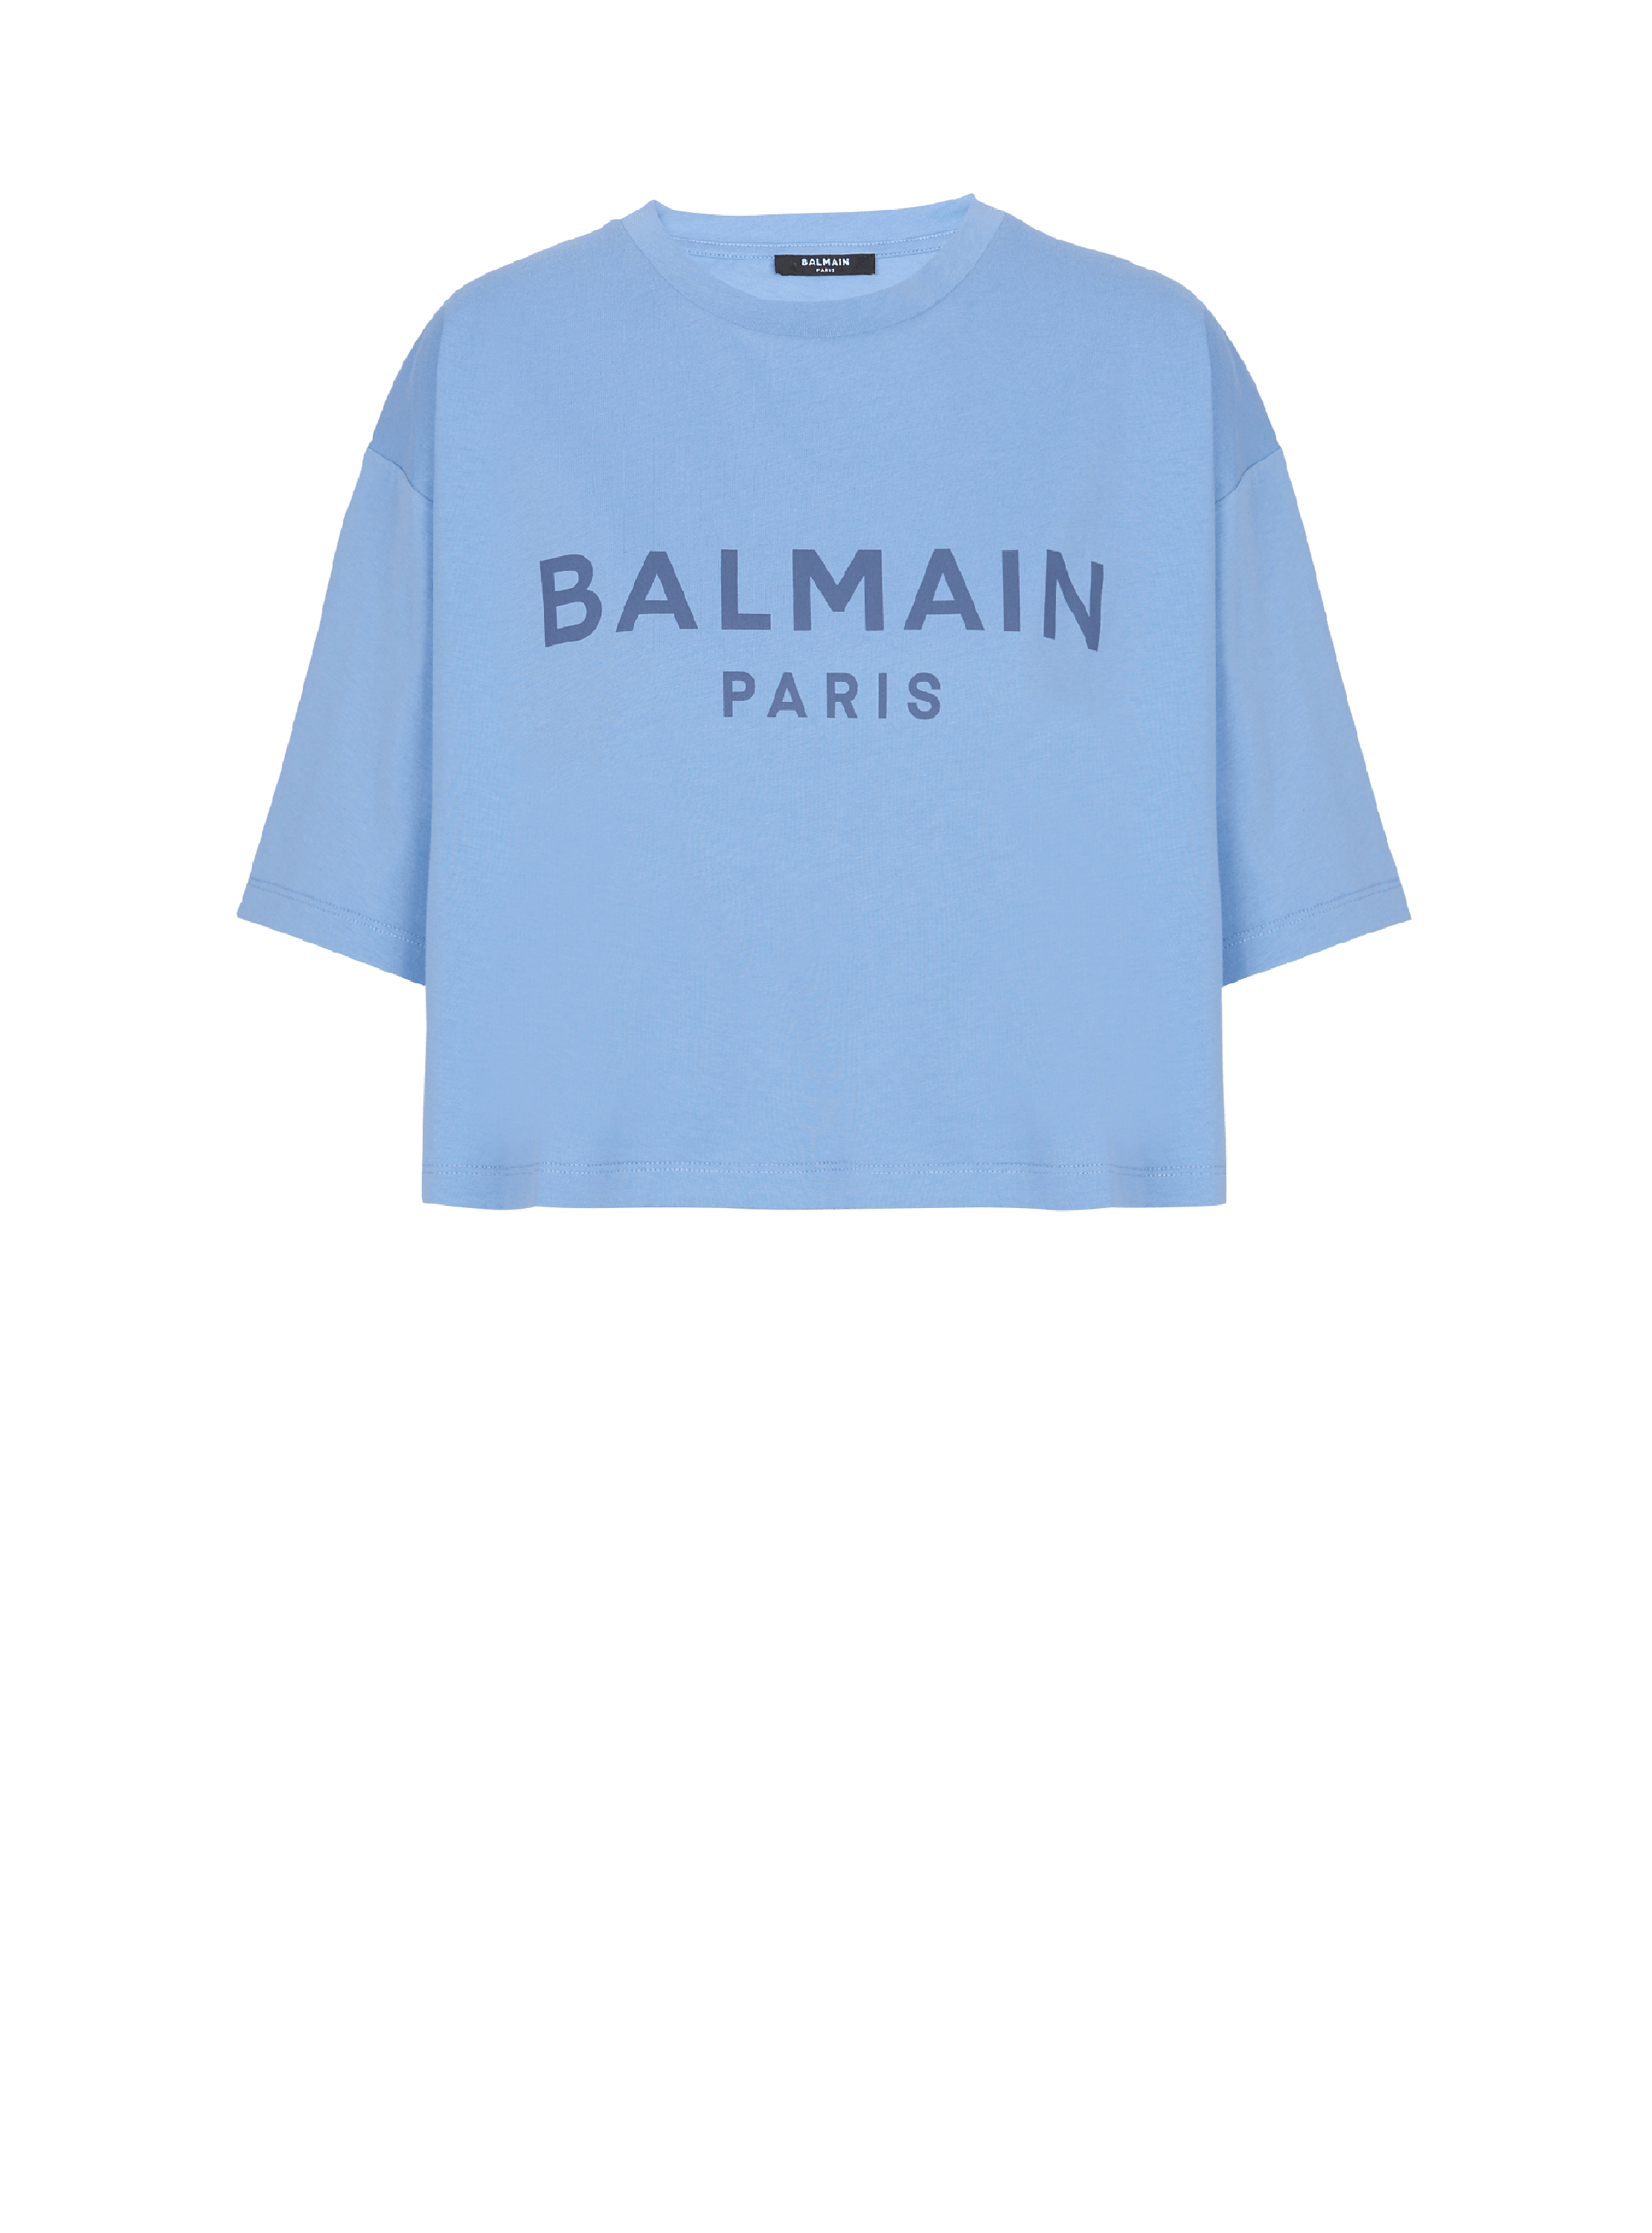 T-shirt corta con logo Balmain stampato, blu, hi-res